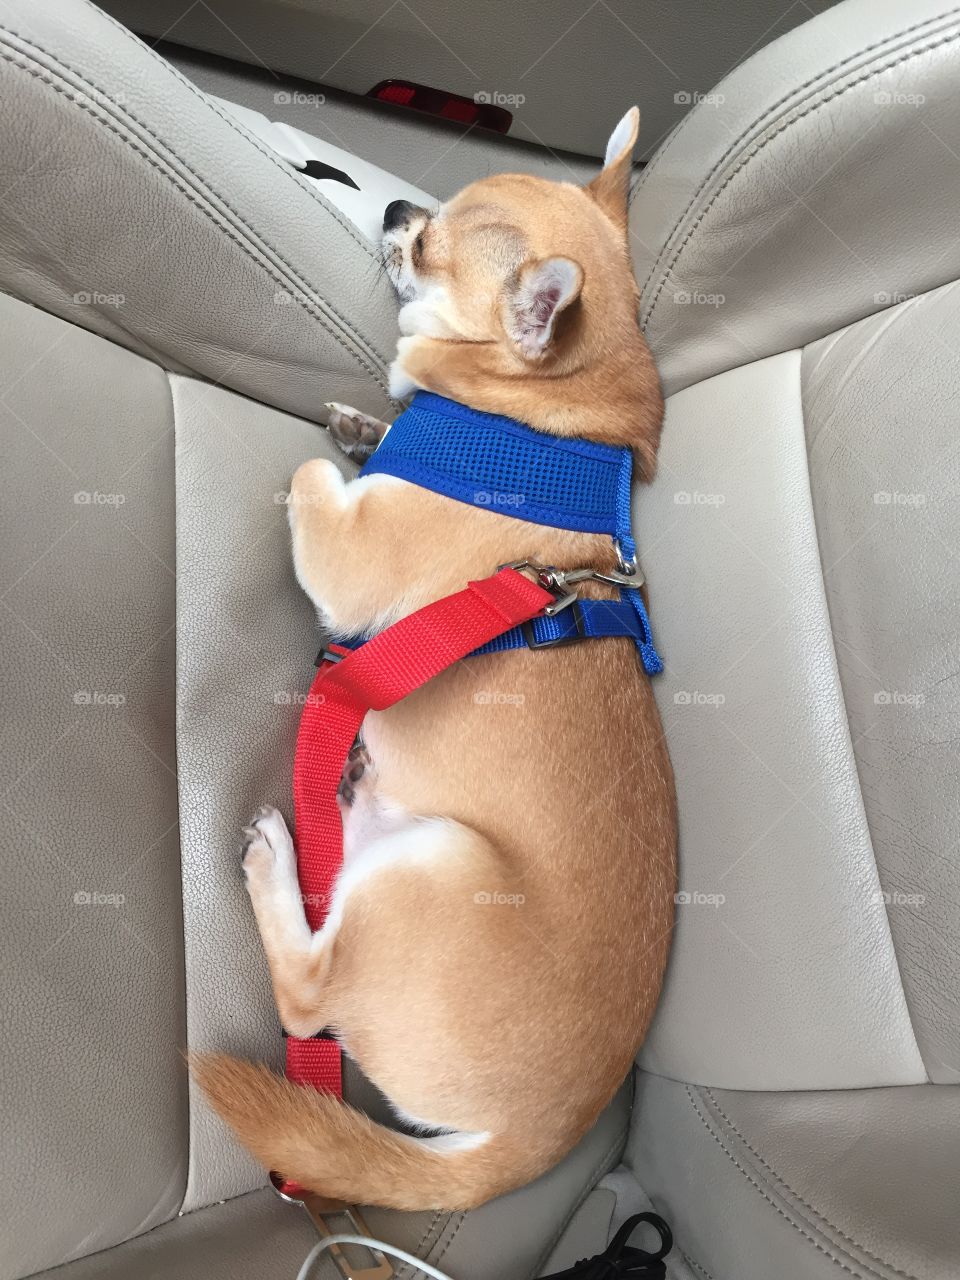 Sleeping dog in the car 